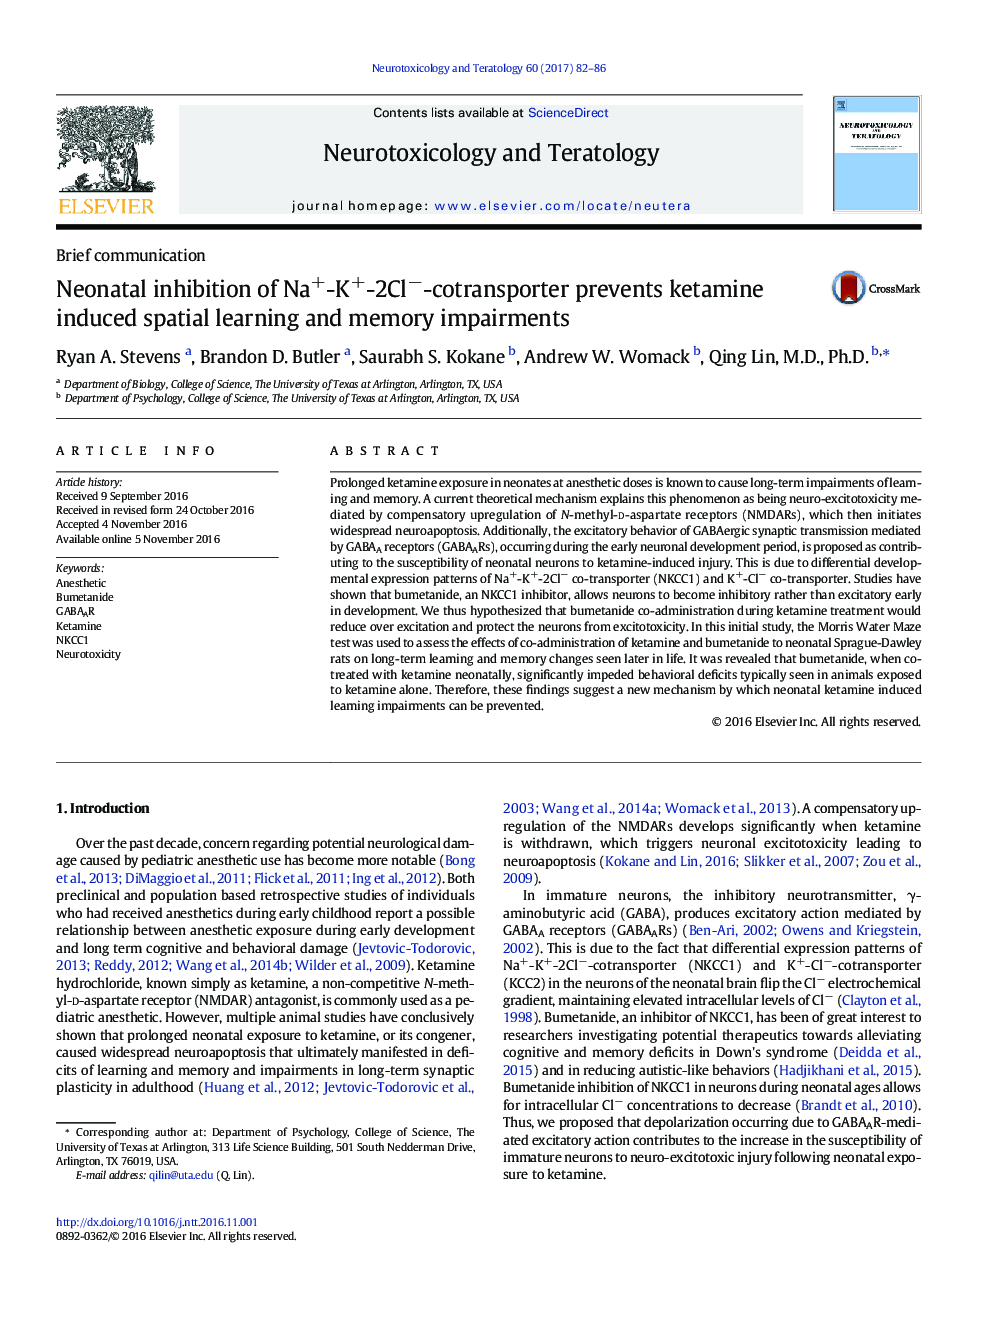 Neonatal inhibition of Na+-K+-2Clâ-cotransporter prevents ketamine induced spatial learning and memory impairments